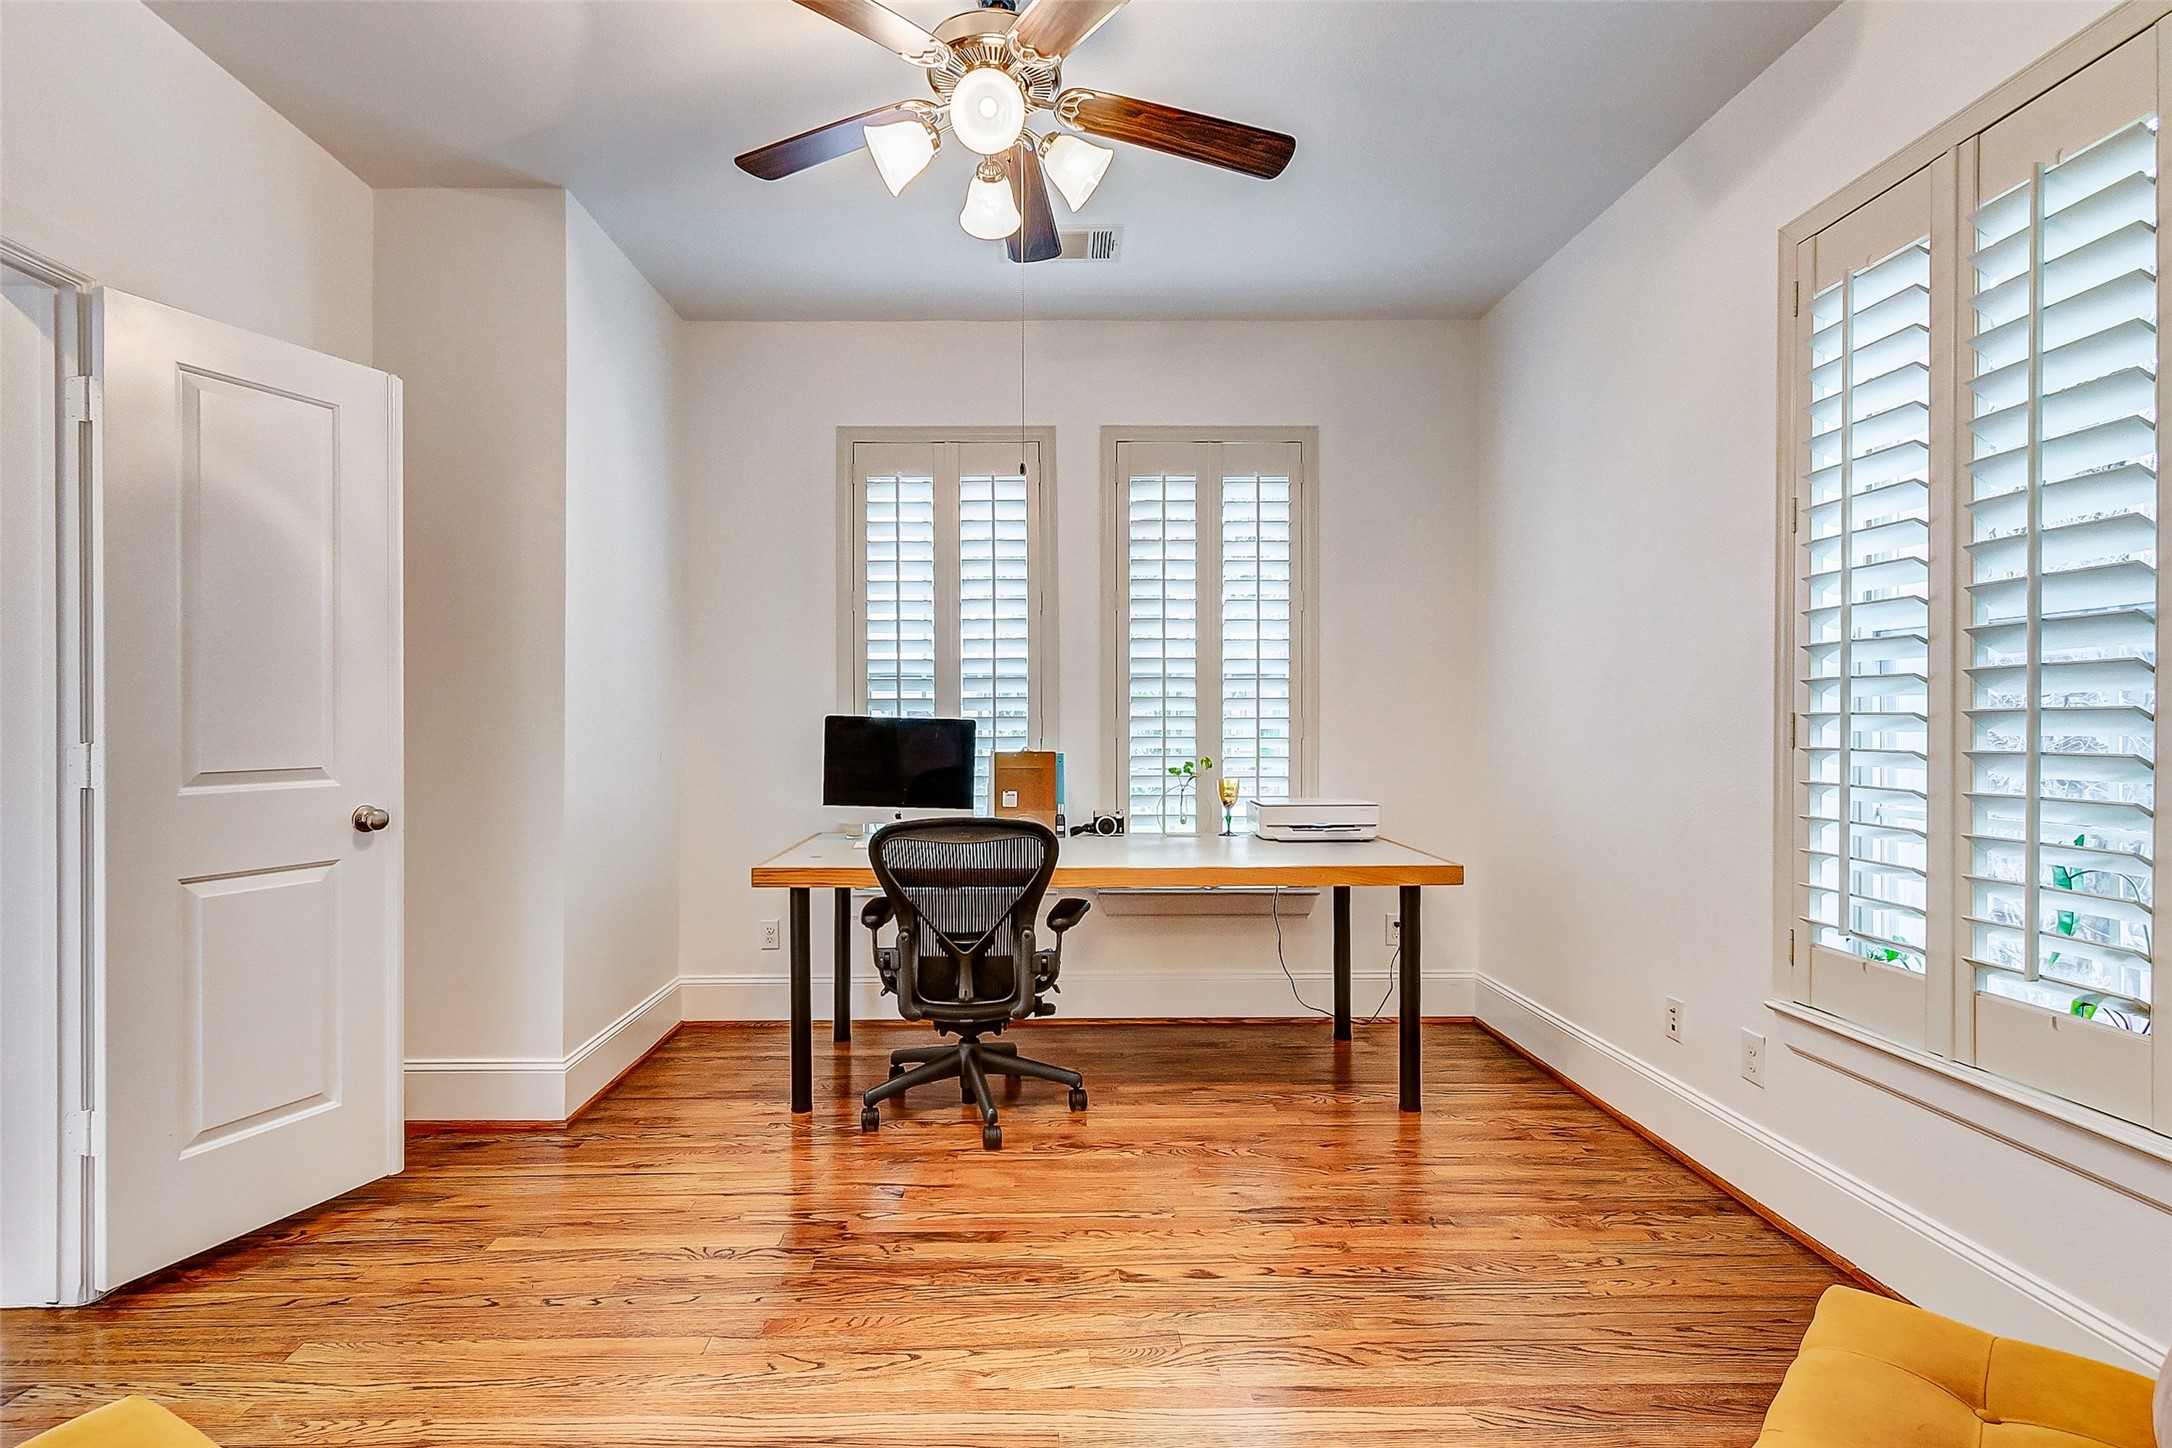 Spacious first floor bedroom boasting gorgeous wood flooring, soaring ceilings, and custom plantation shutters.